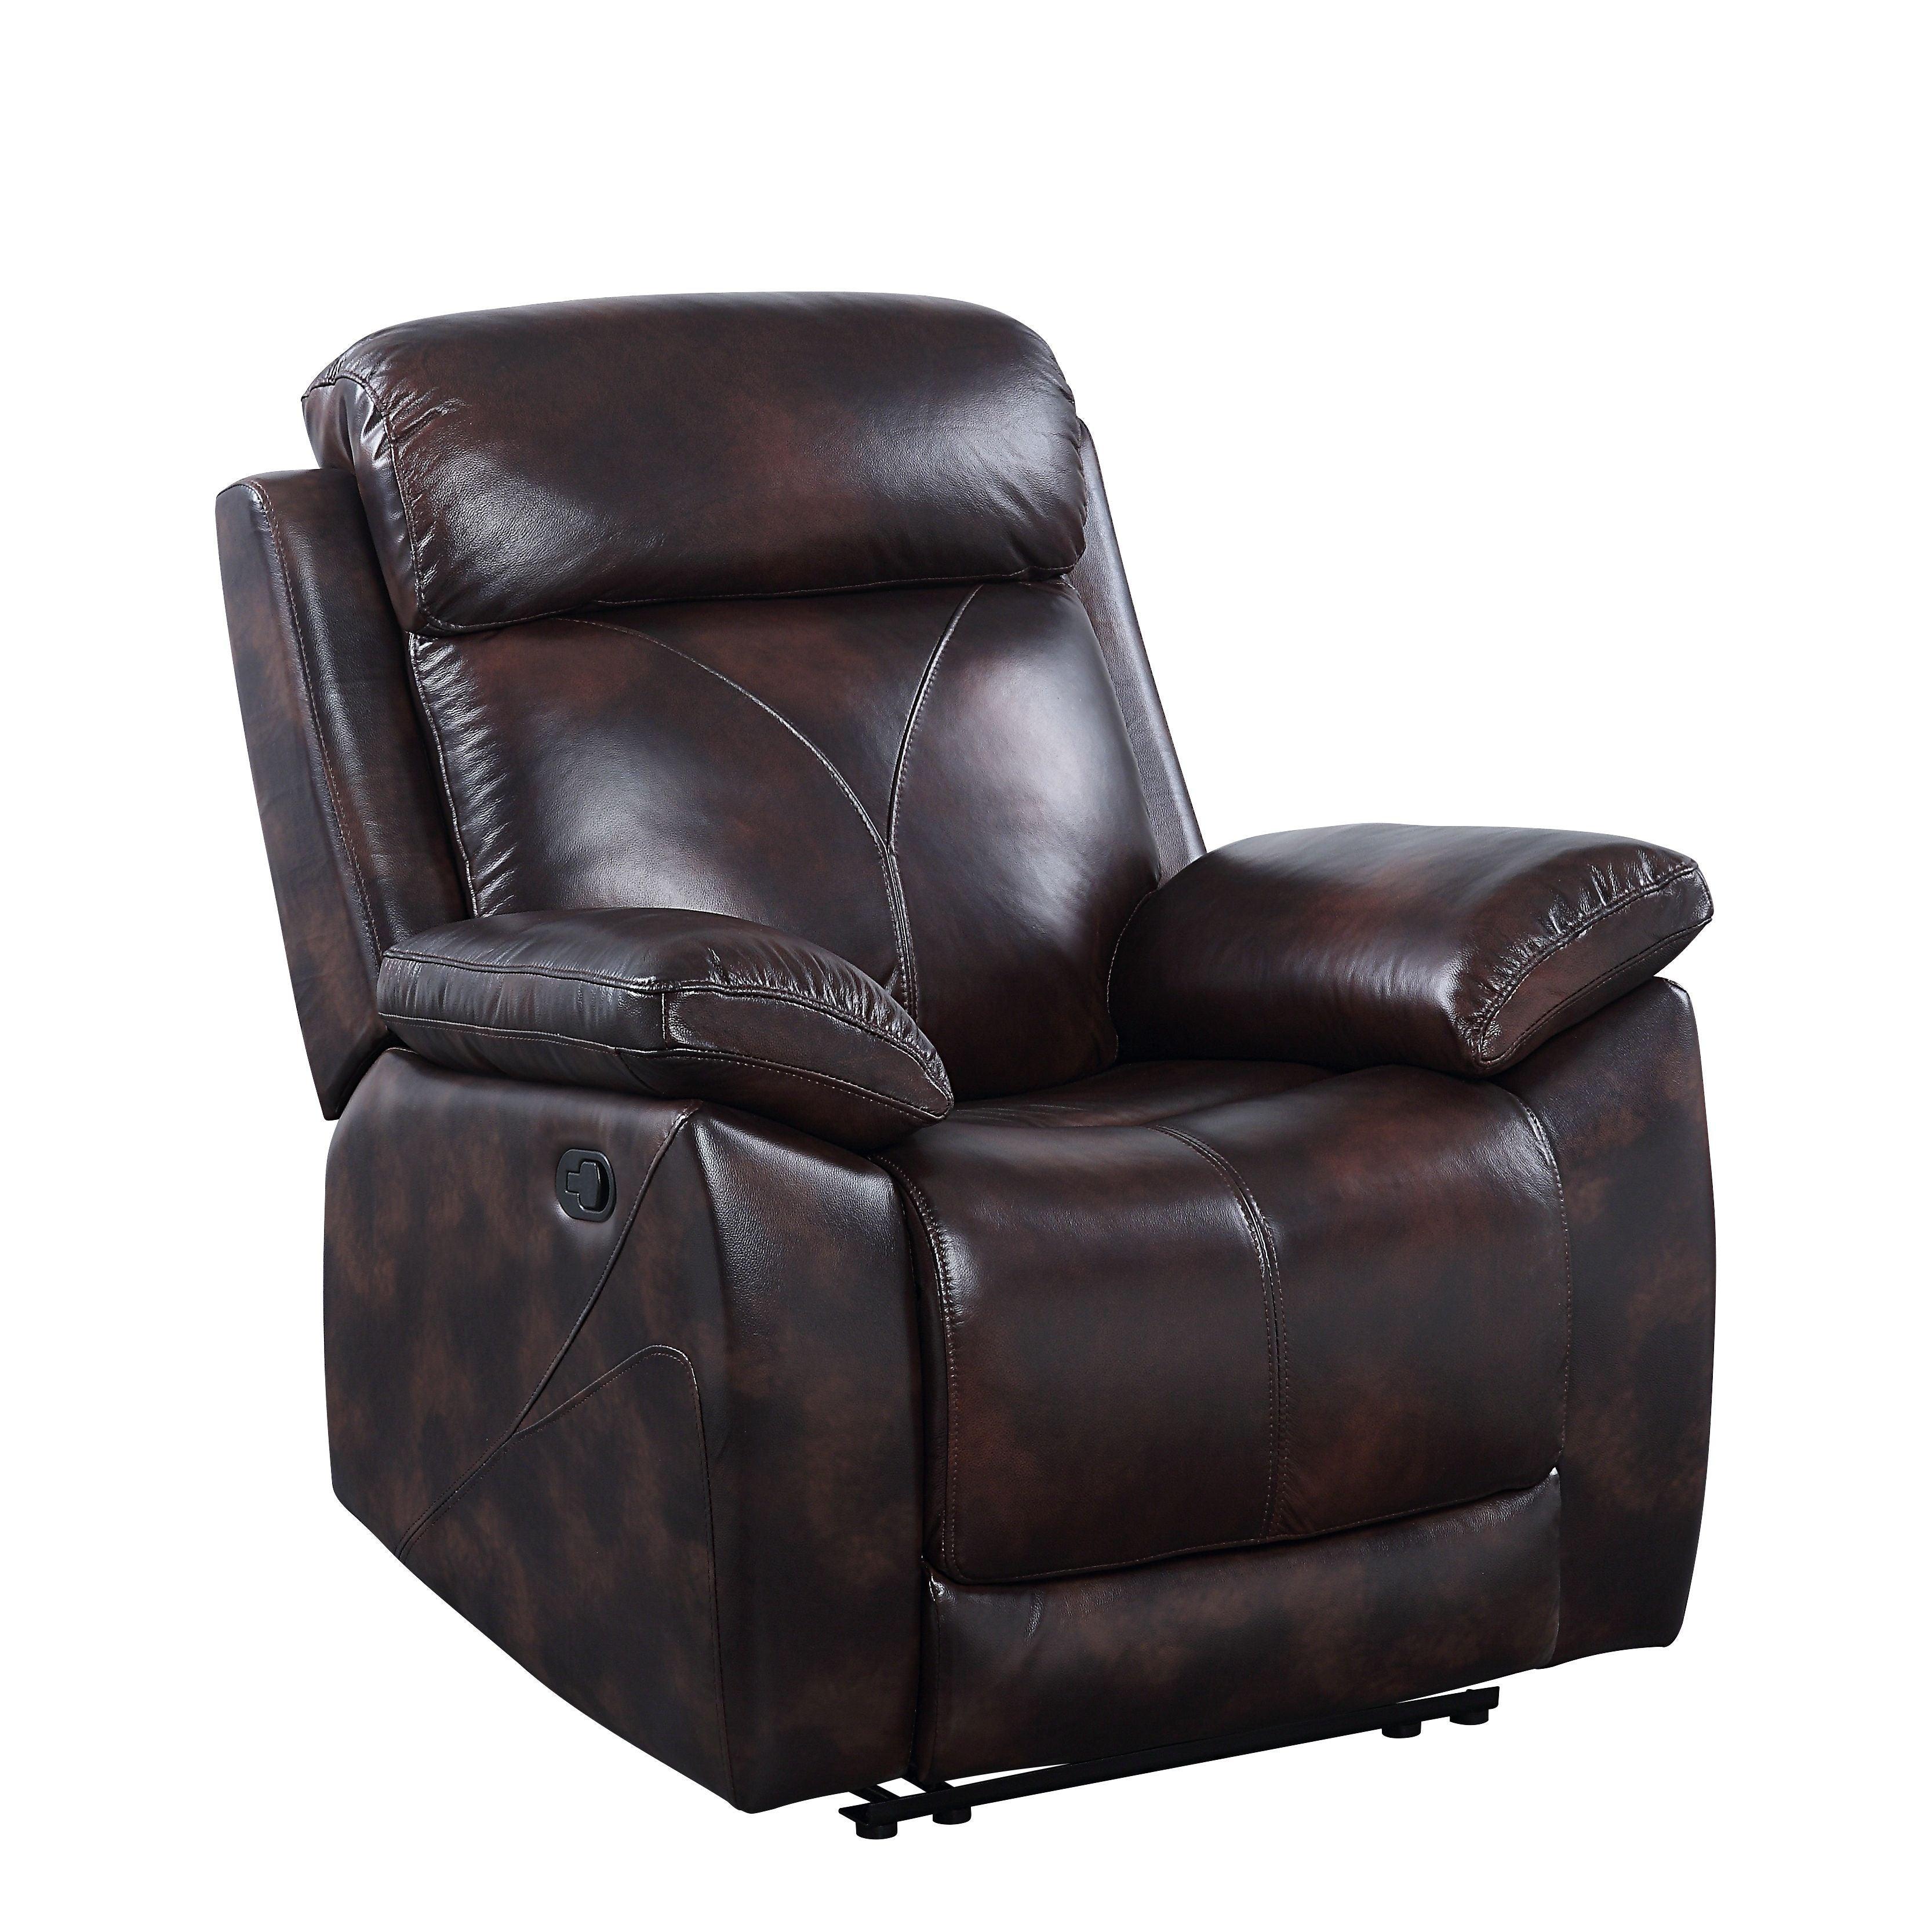 ACME - Perfiel - Recliner - 2 Tone Dark Brown Top Grain Leather - 5th Avenue Furniture